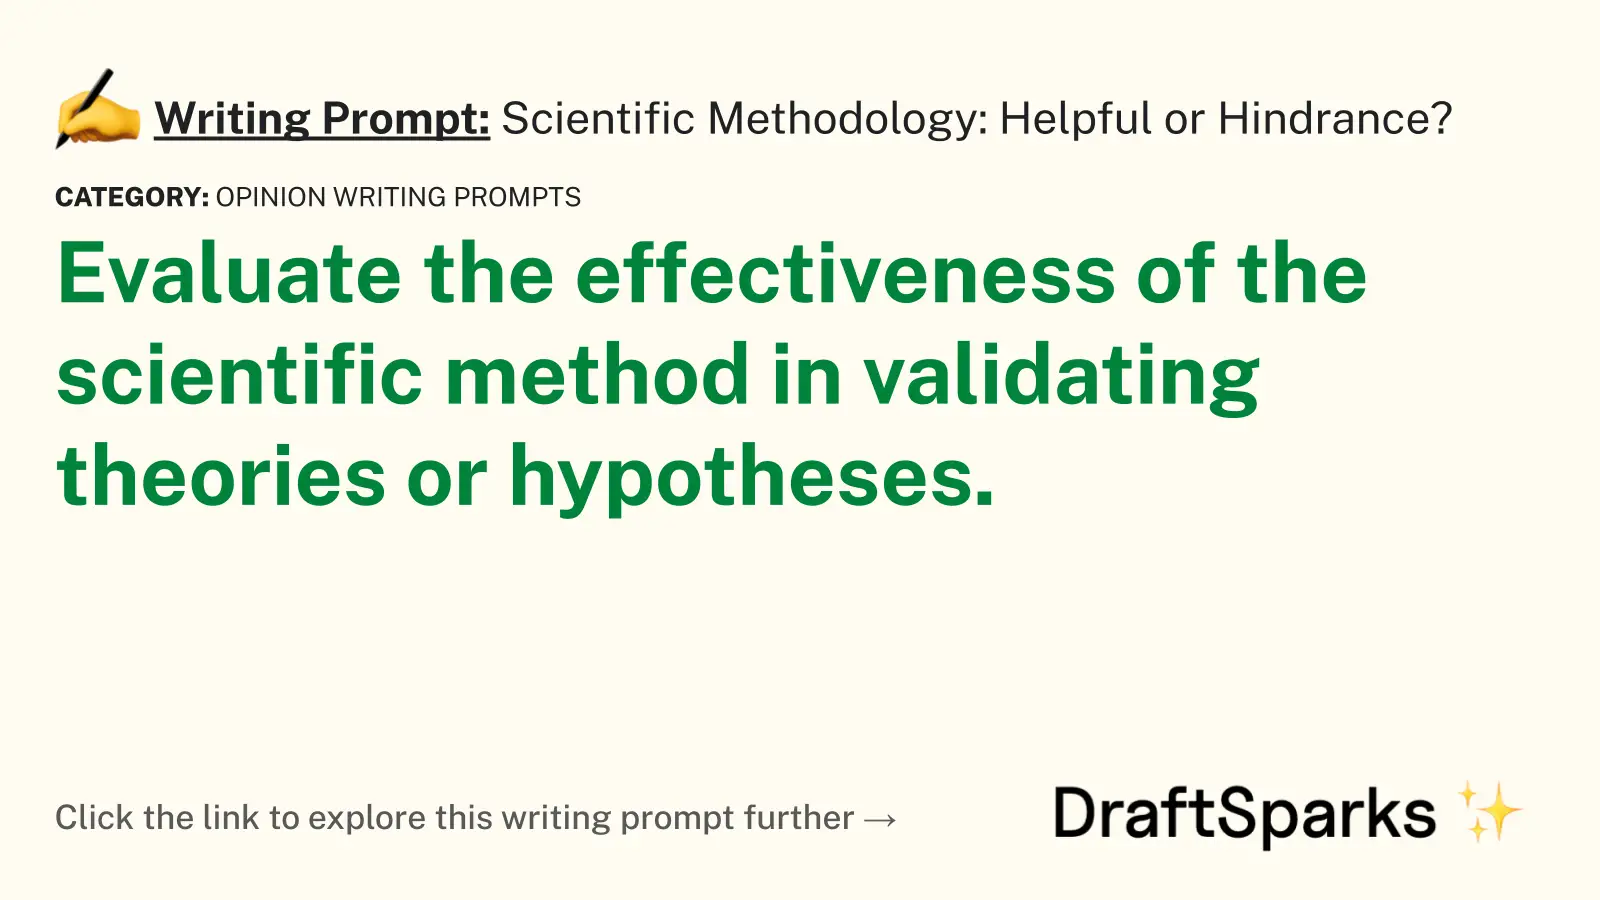 Scientific Methodology: Helpful or Hindrance?